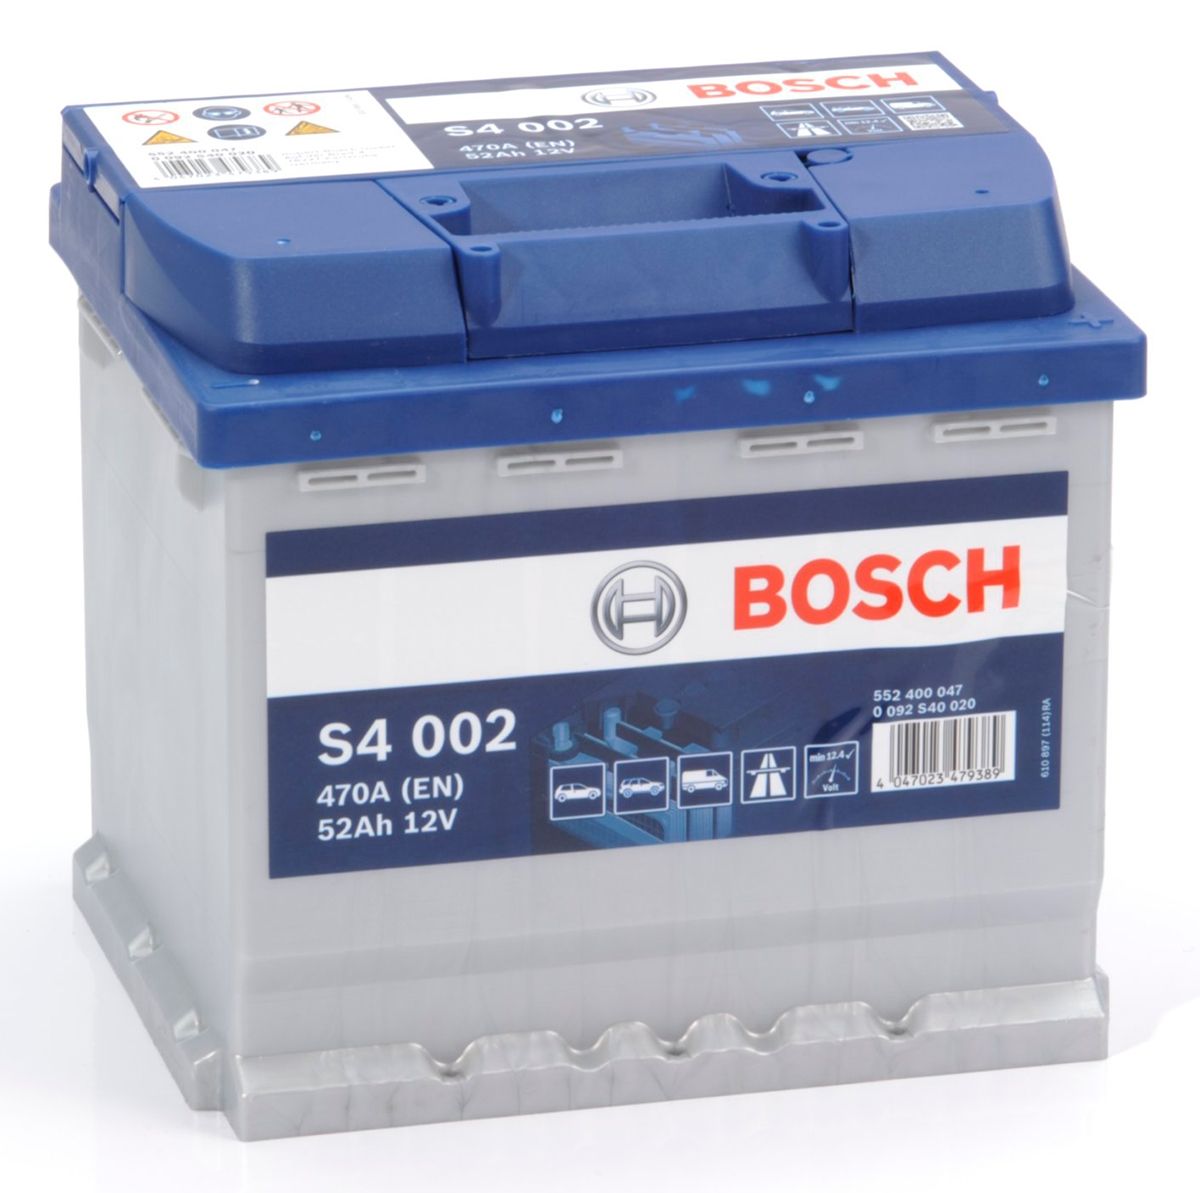 S4 002 Bosch Car Battery 12V 52Ah Type 079 S4002